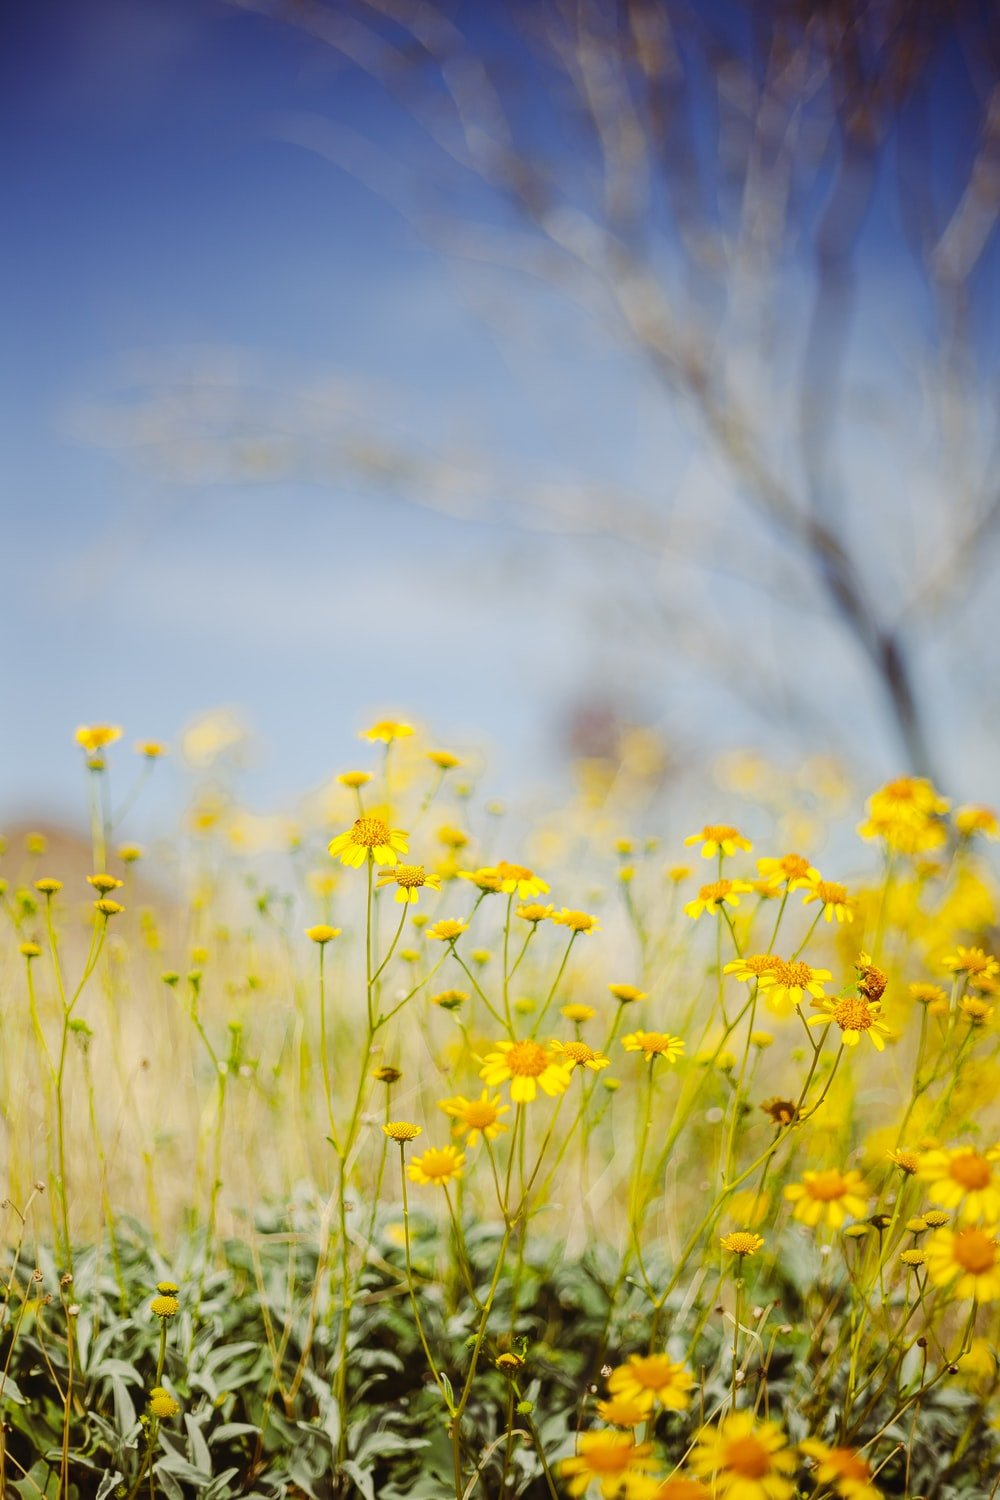 yellow flower field under blue sky during daytime photo